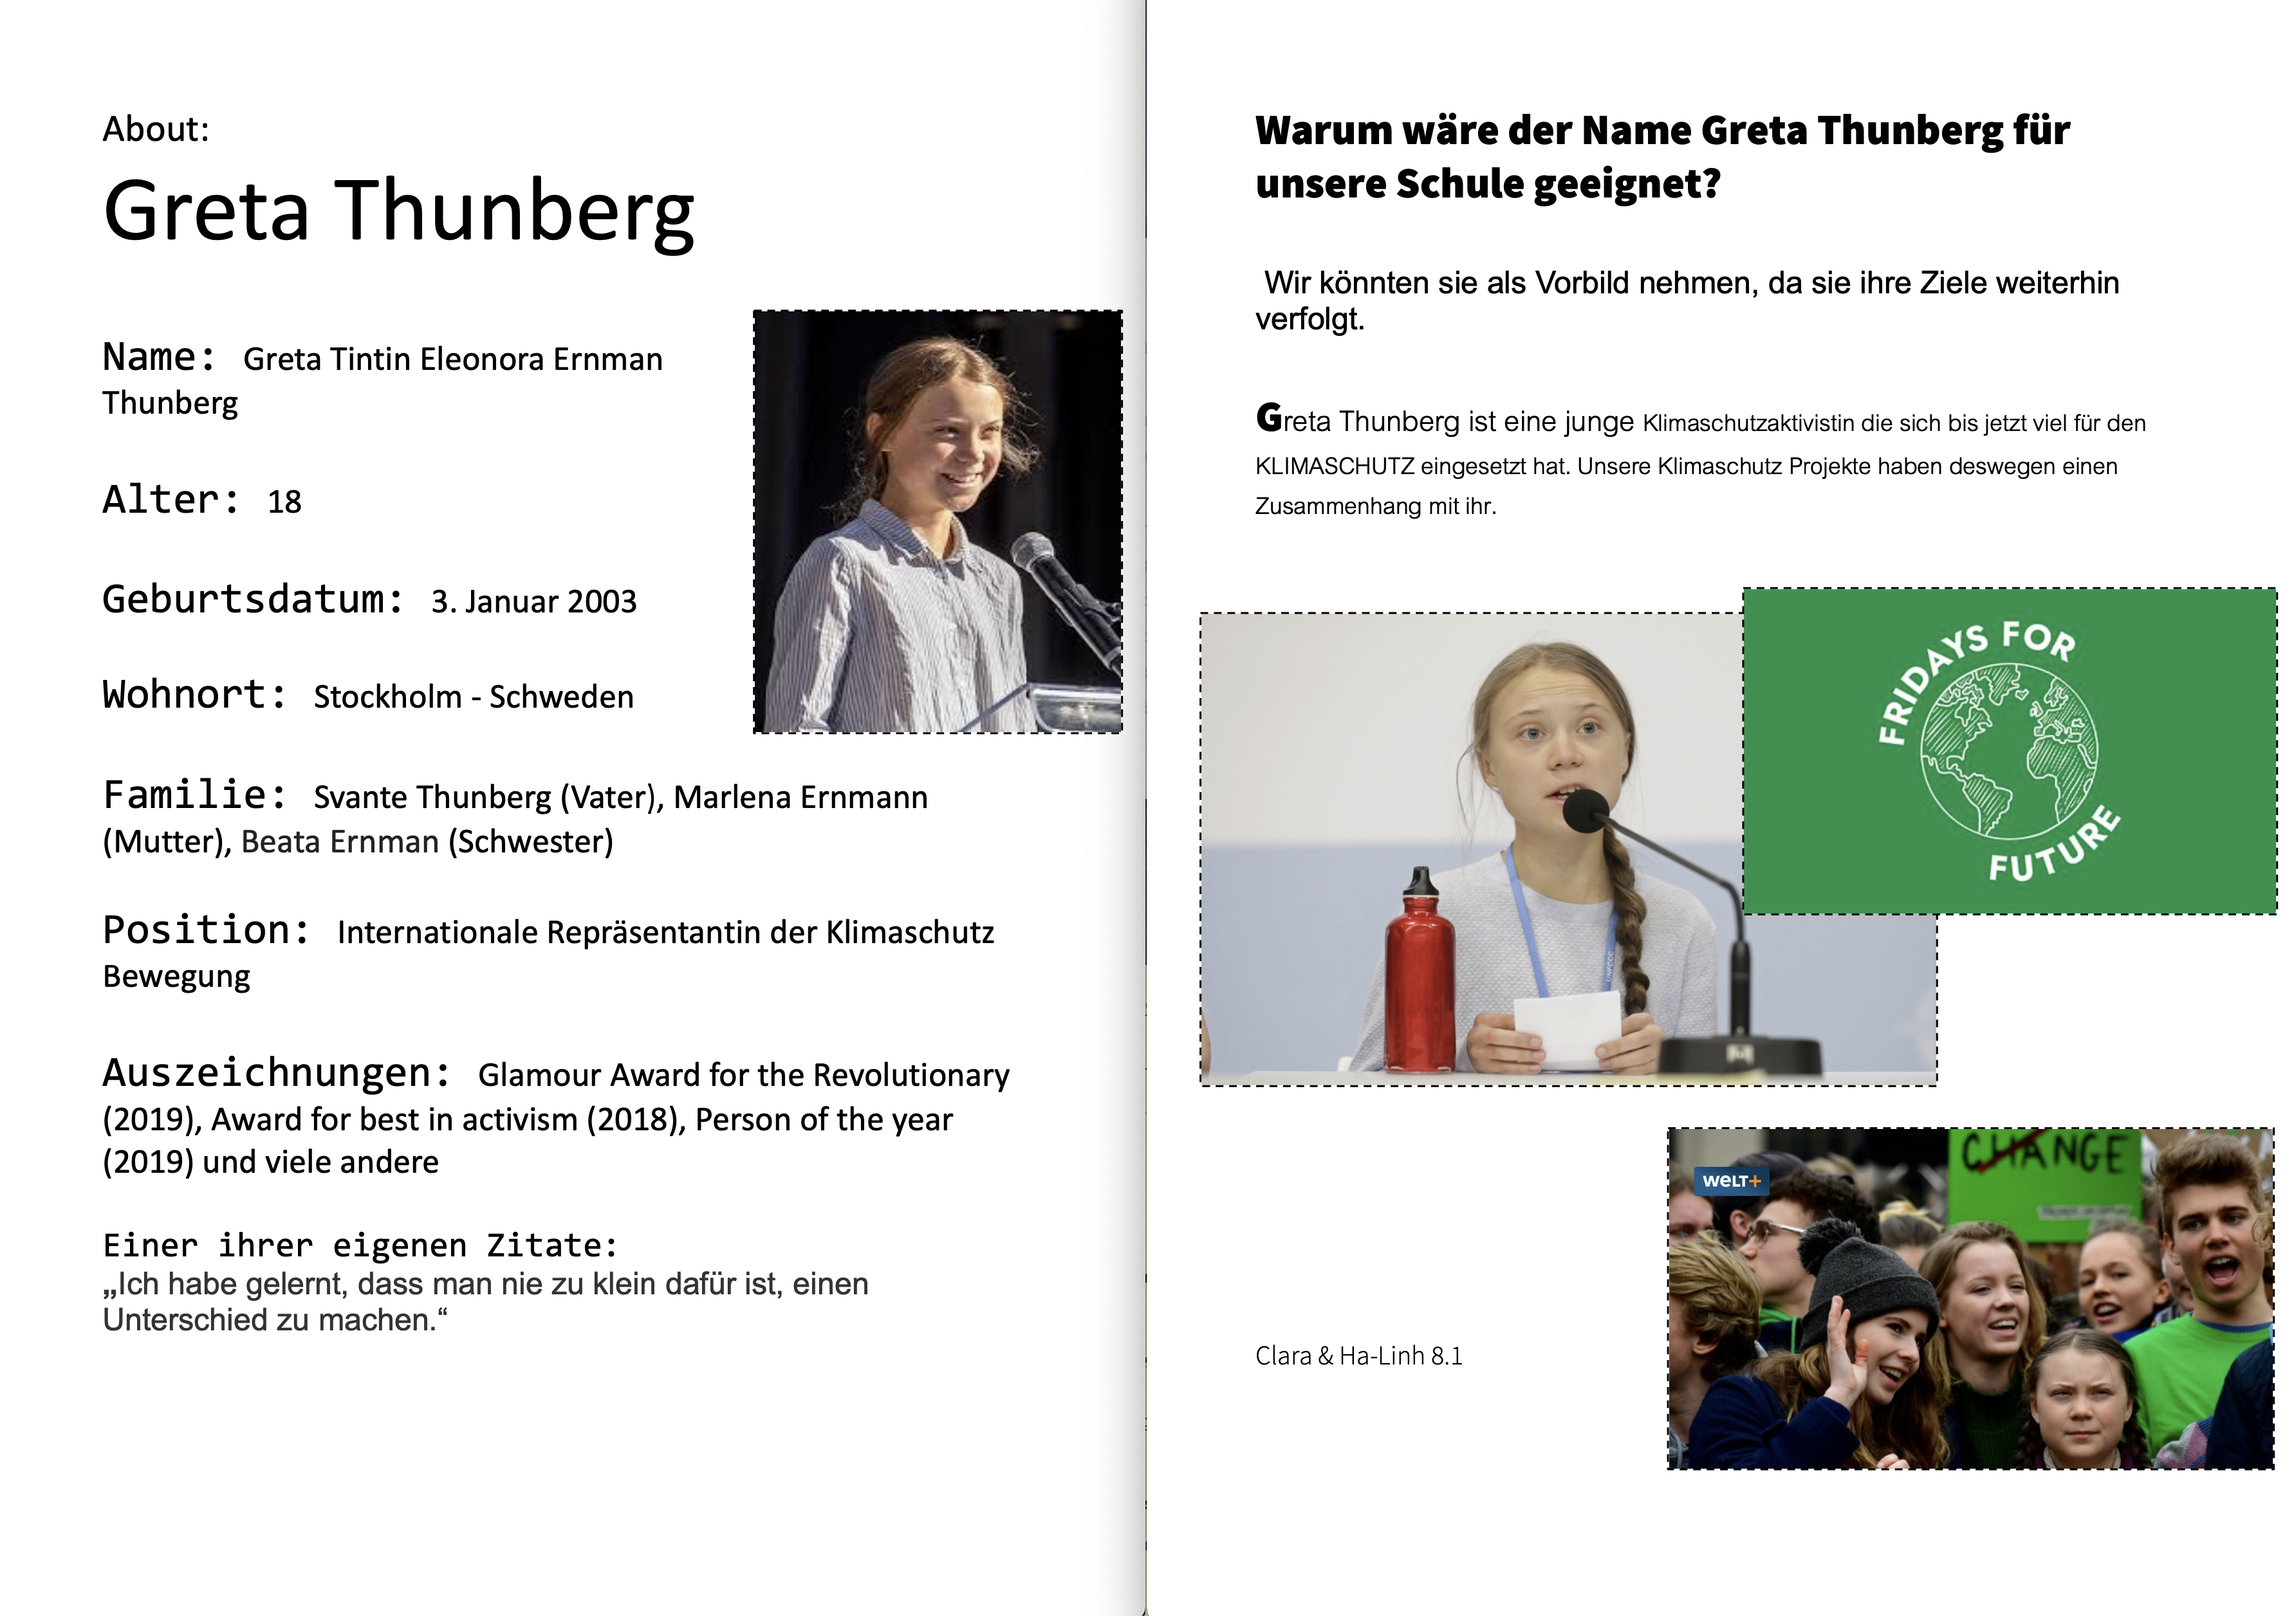 Greta Thunberg Gemeinschaftsschule 8.1 Clara & Ha-Linh